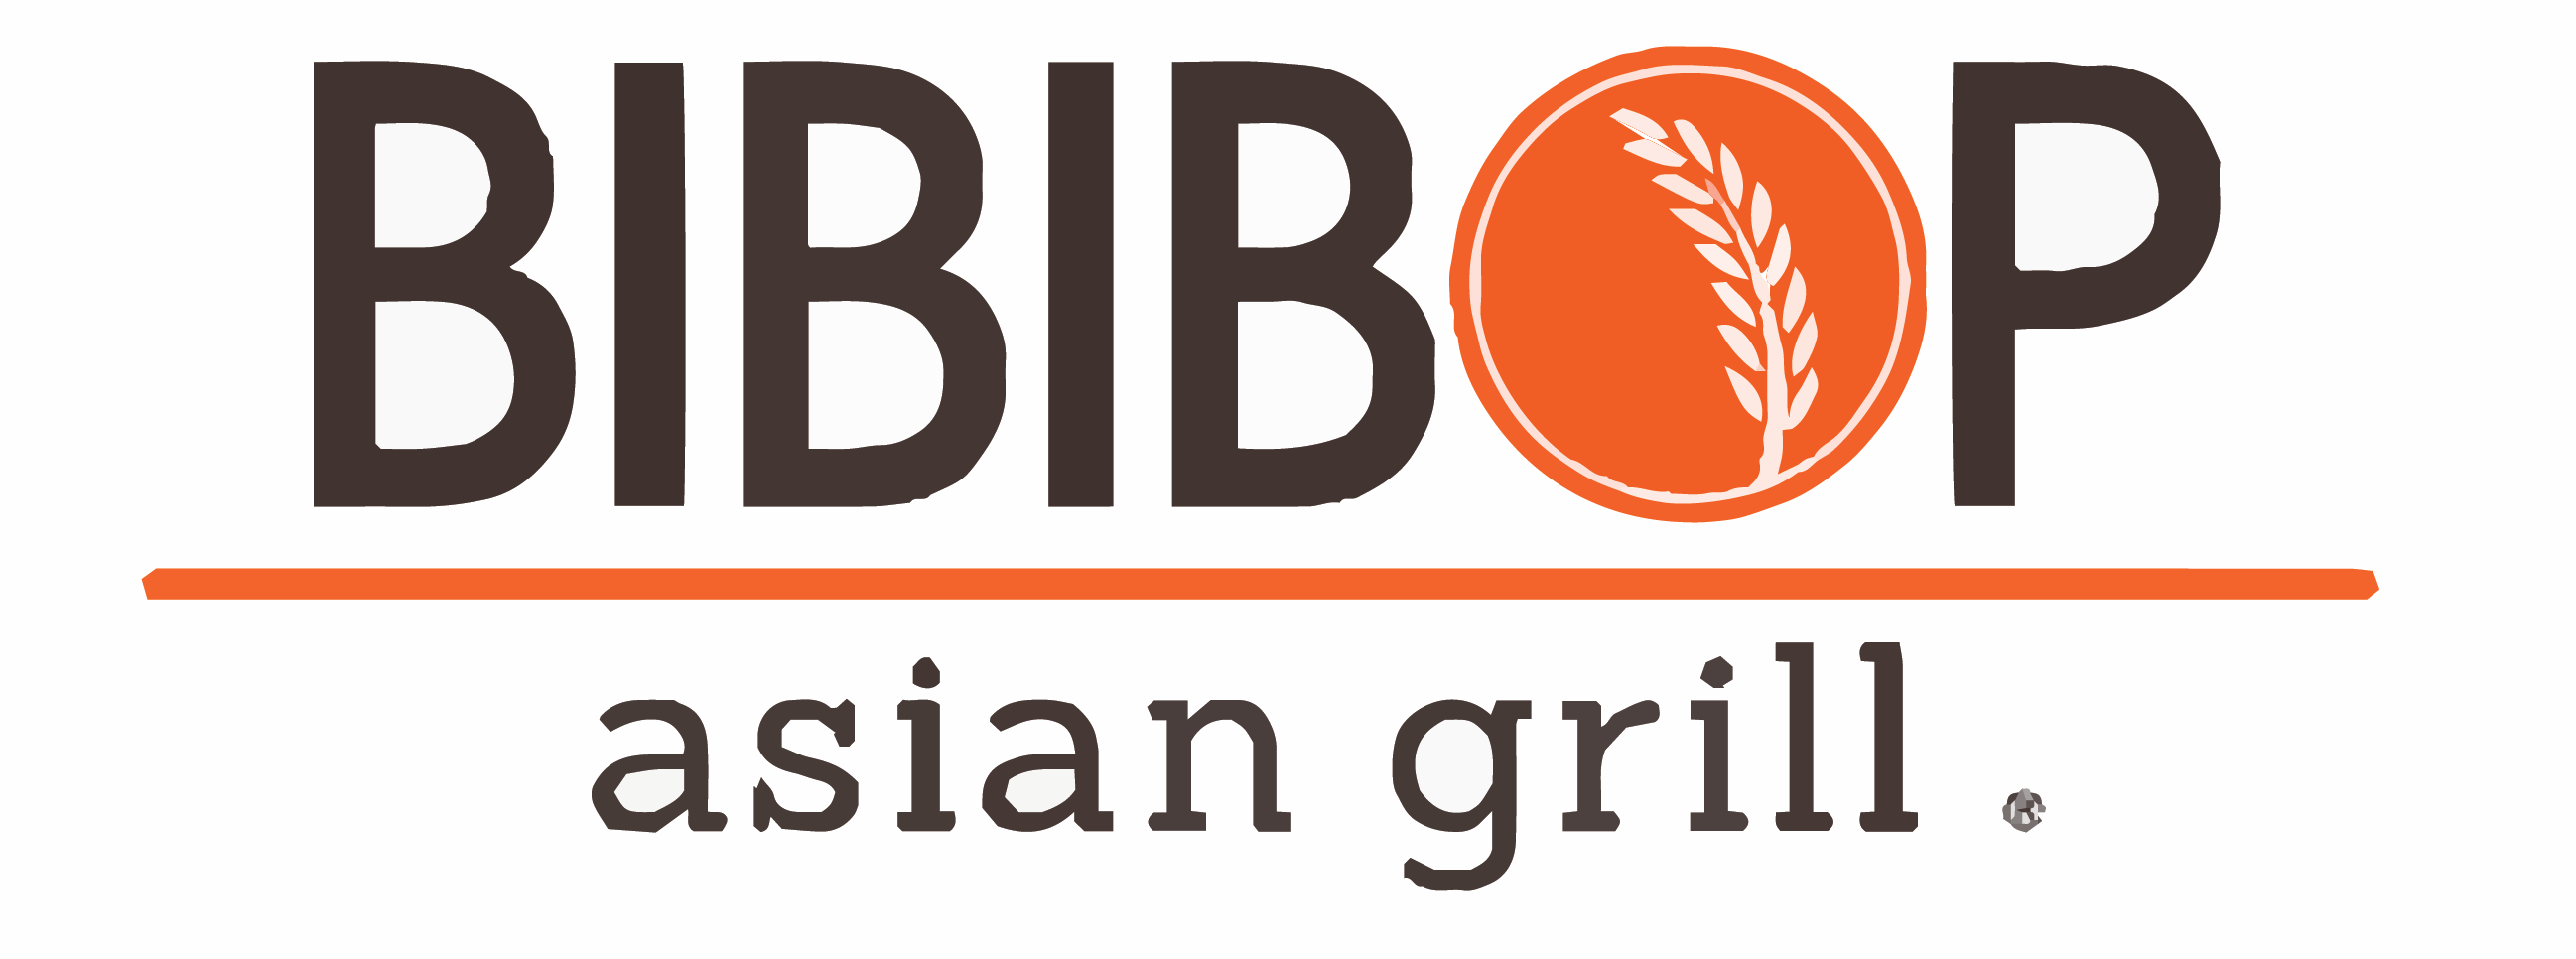 Bibibop Logo - Bibibop png image trace - Edge Real Estate Group